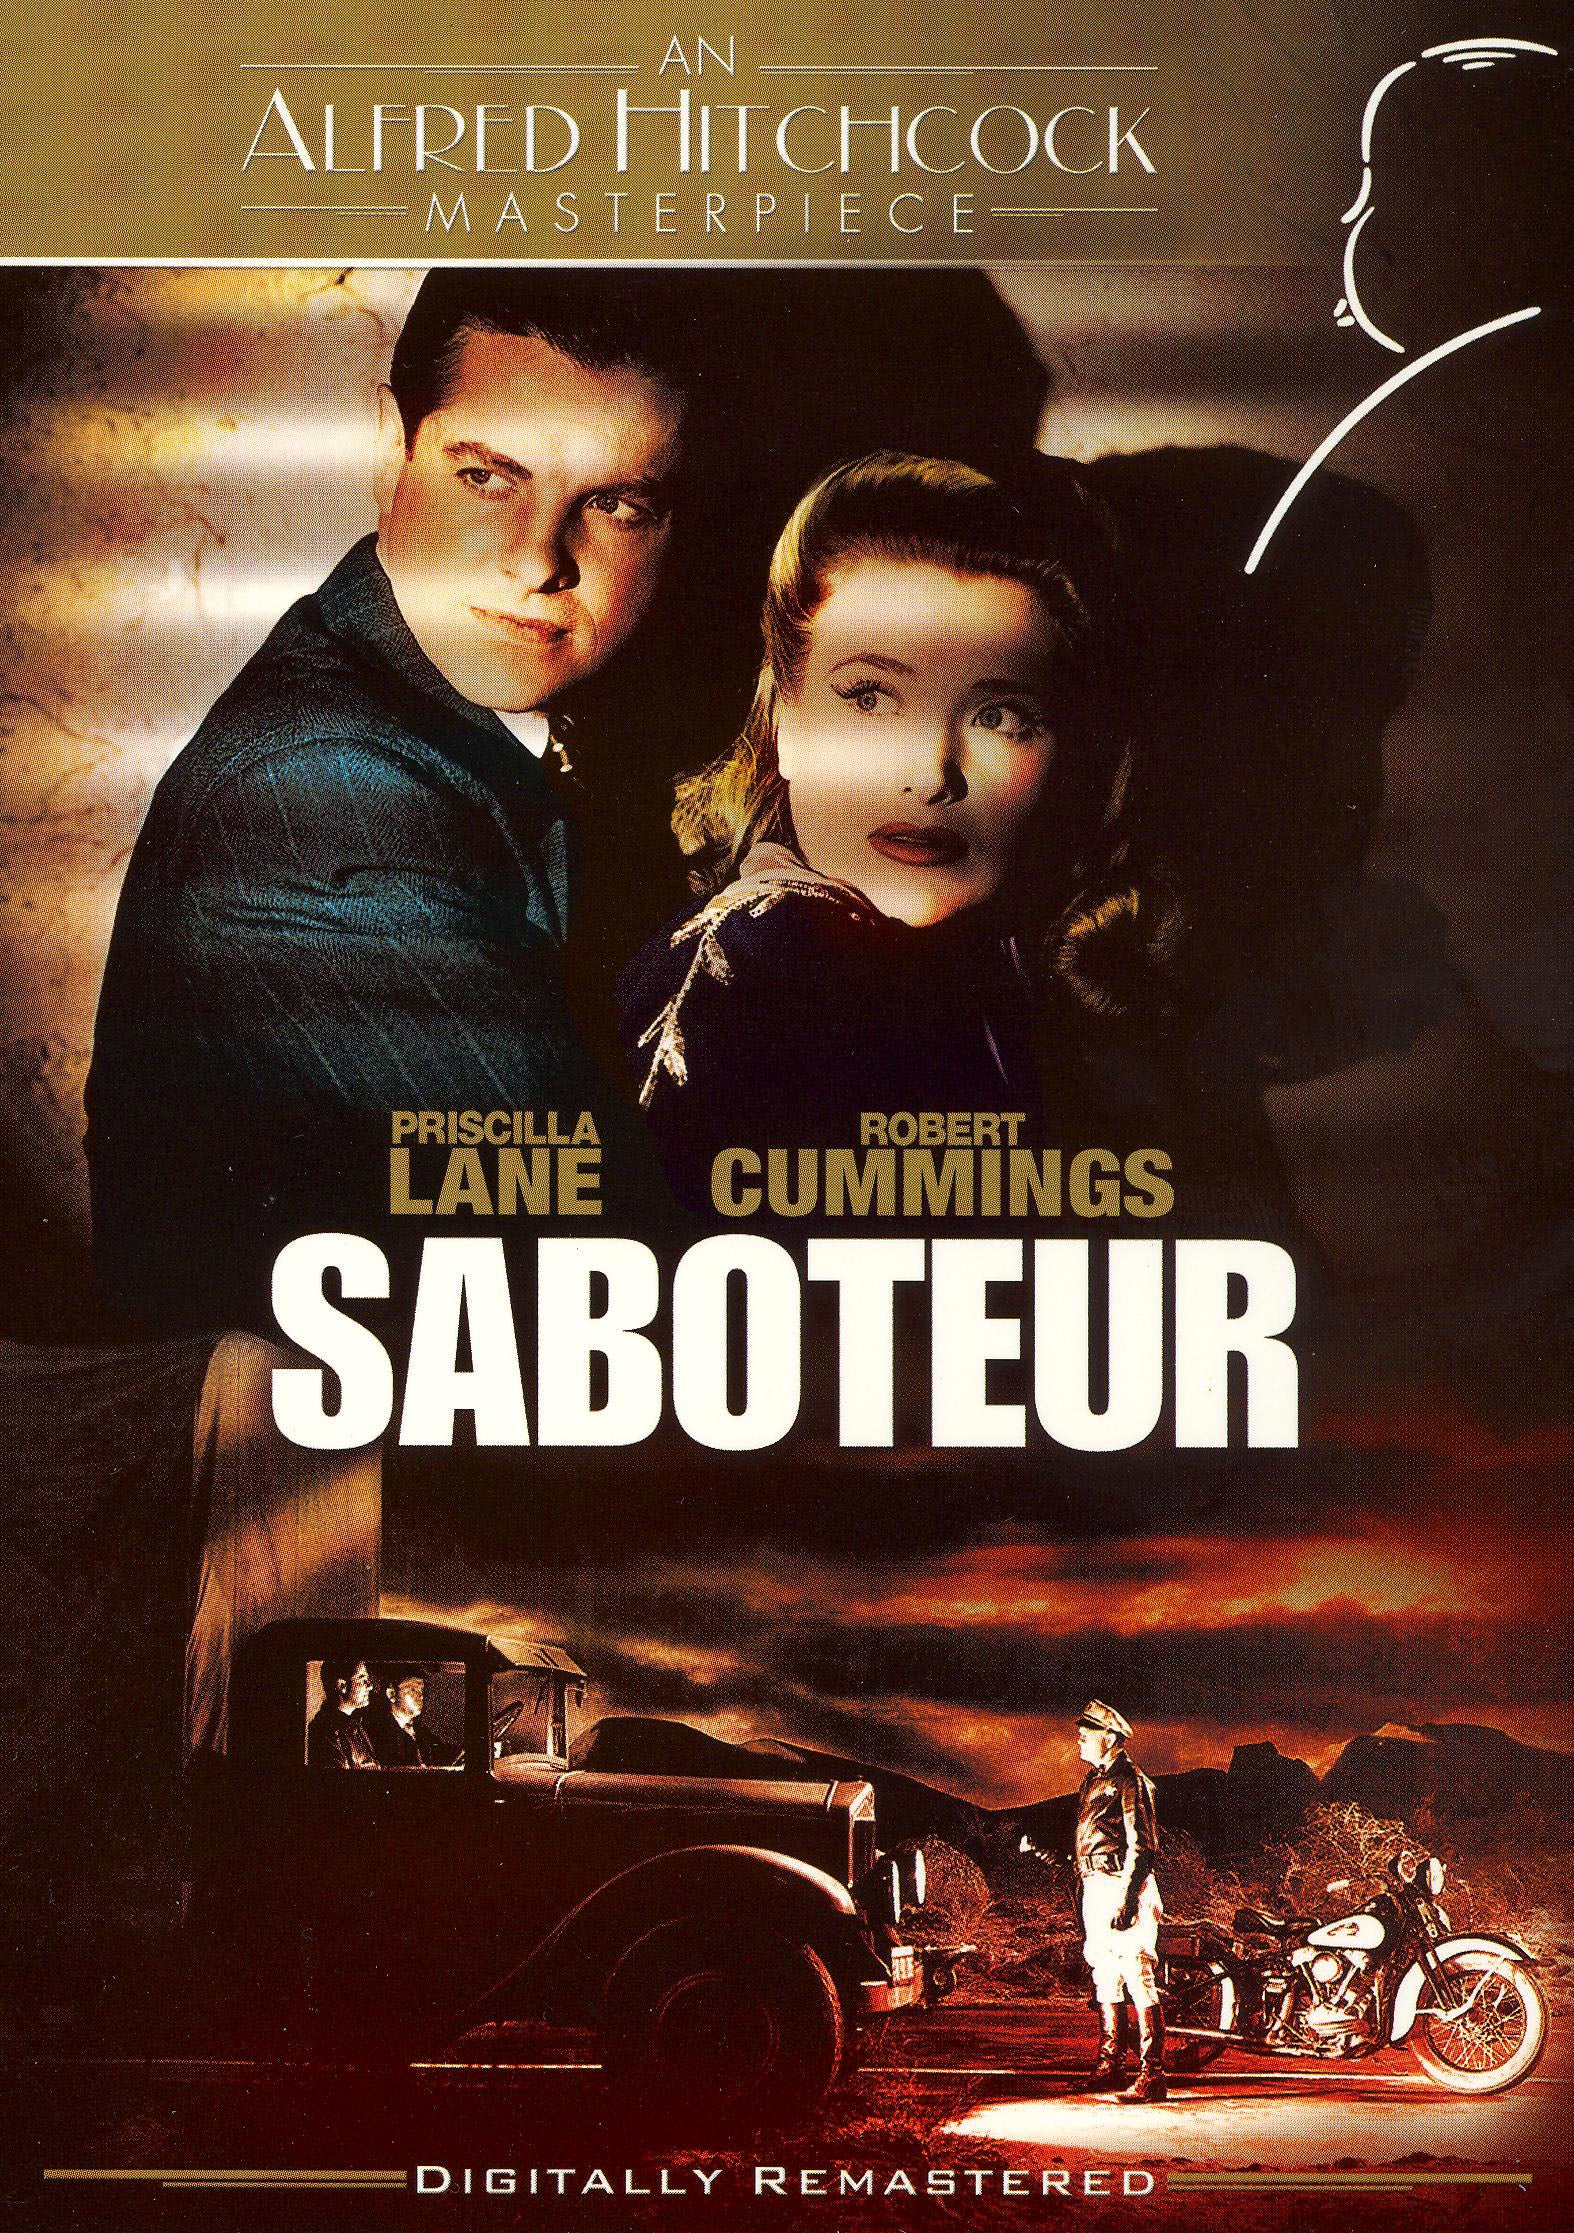 Saboteur cover art